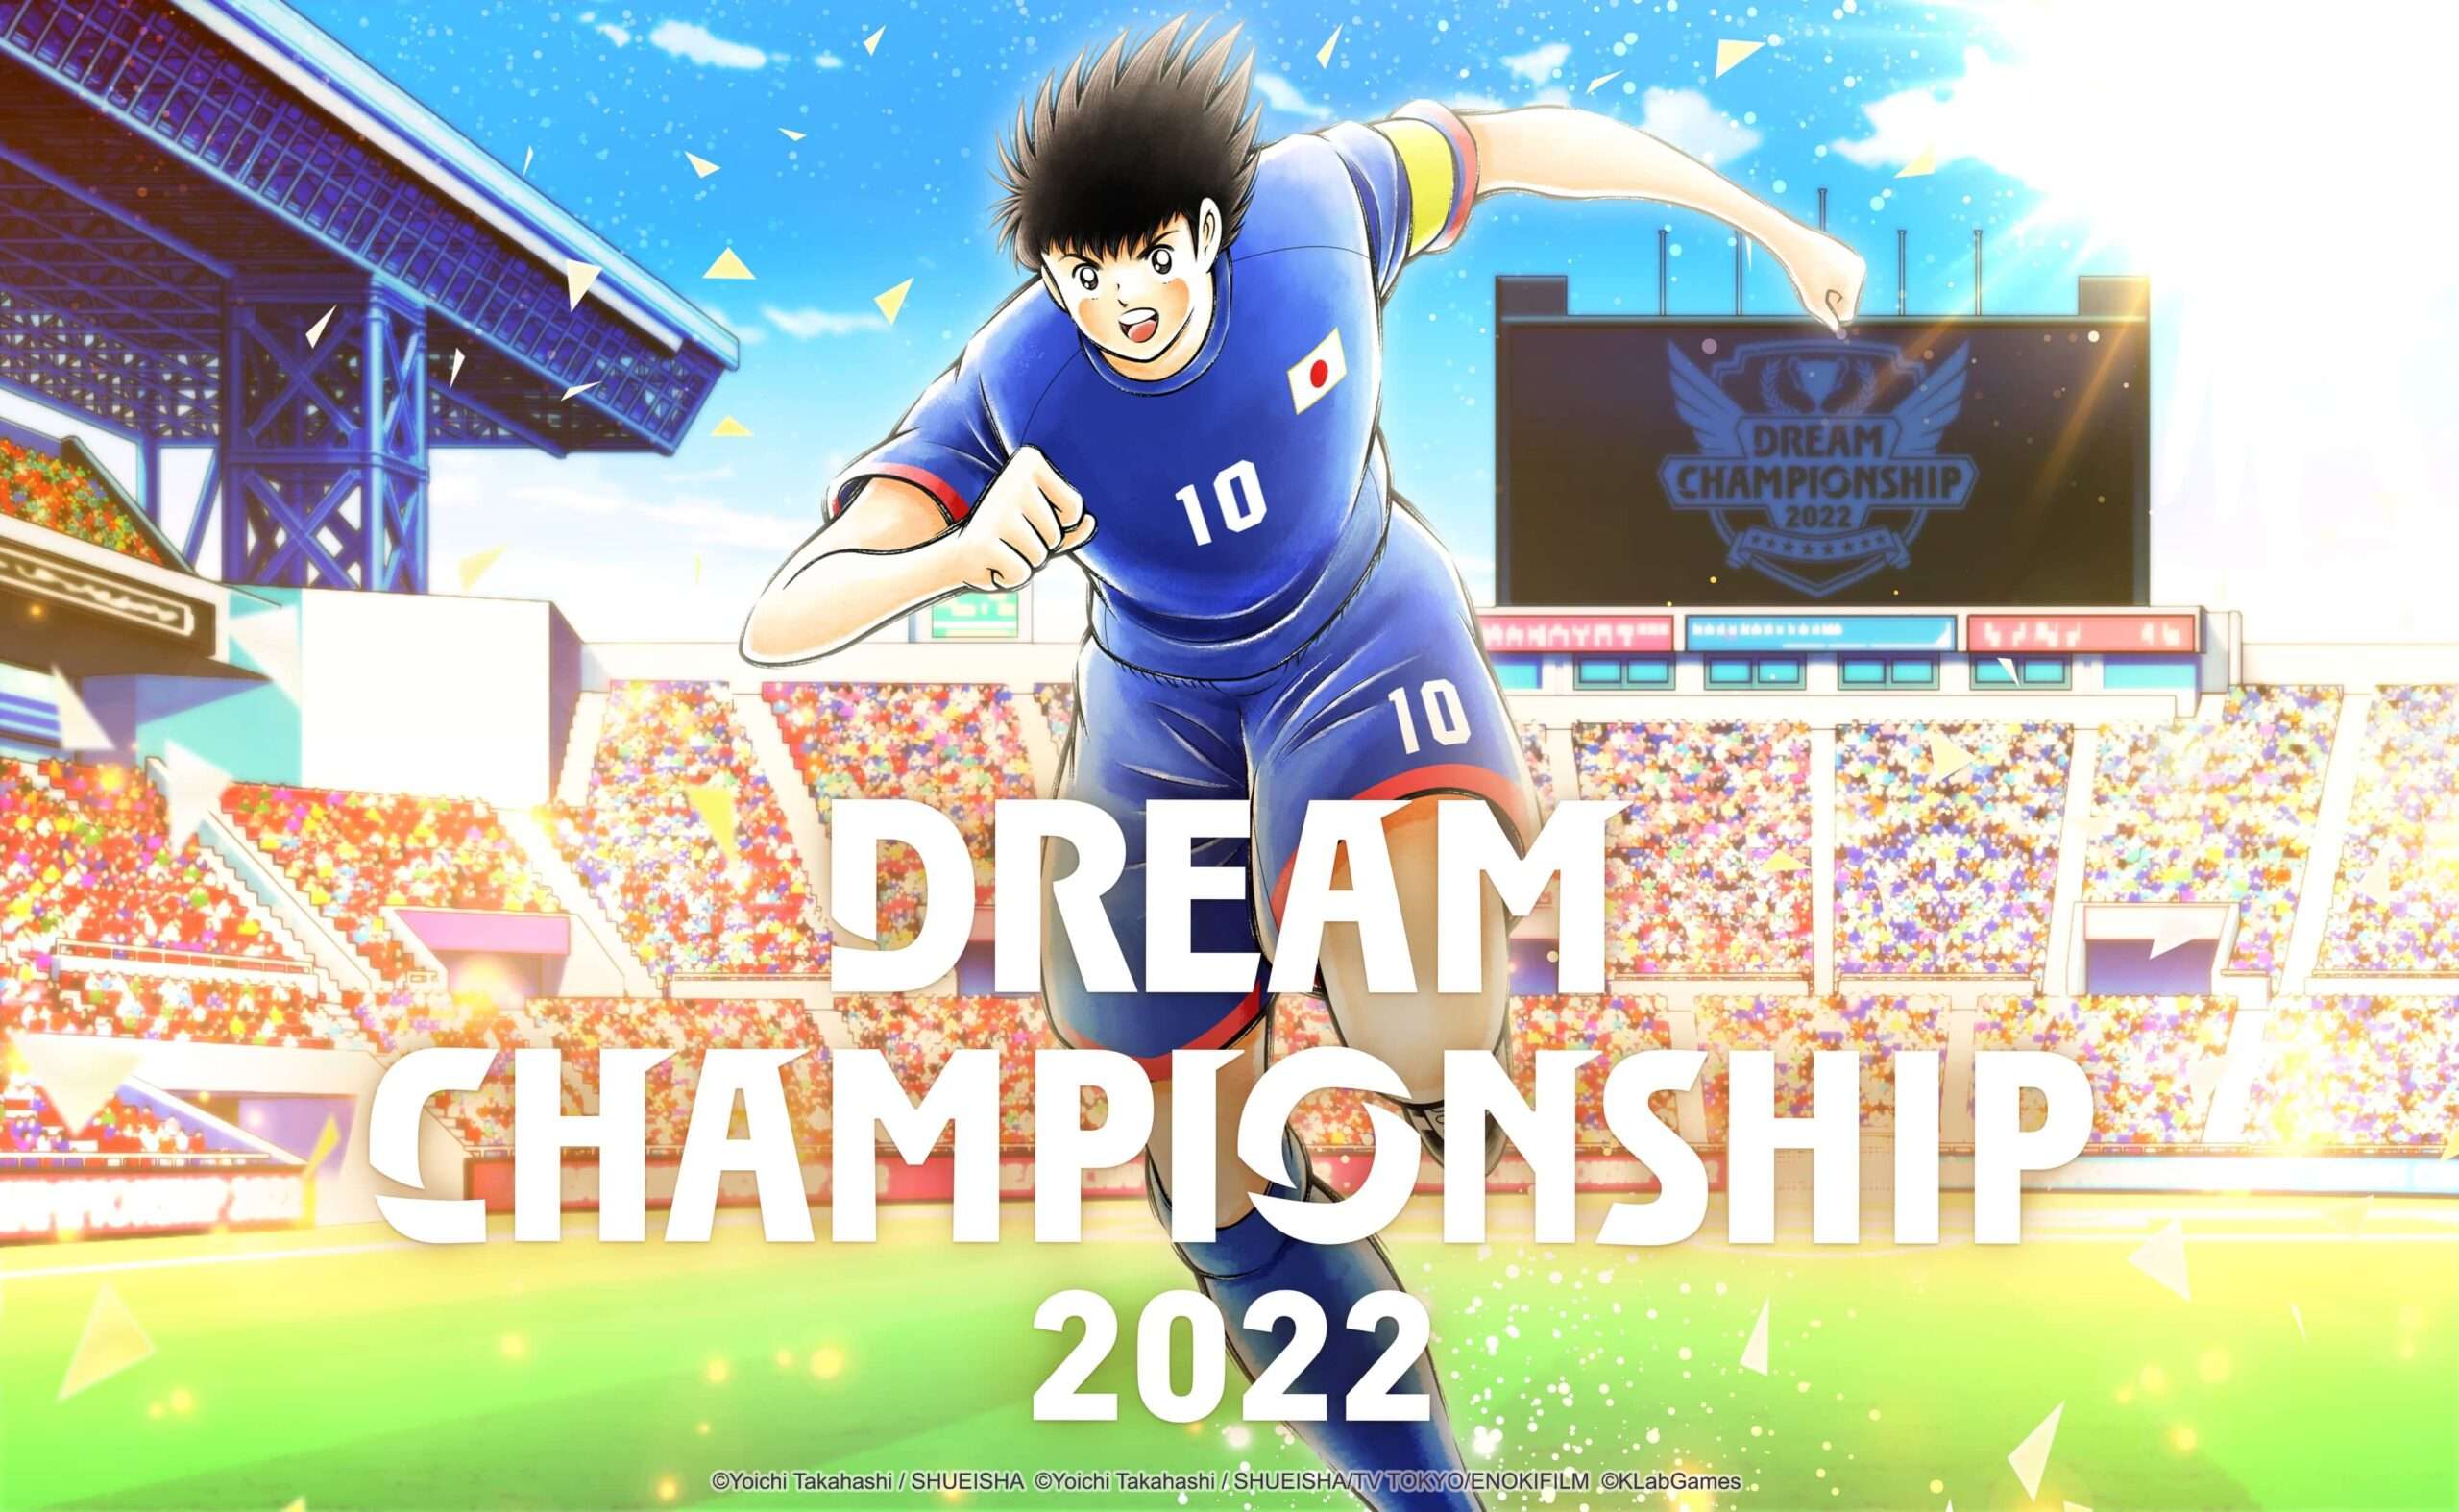 "Captain Tsubasa: Dream Team" Dream Championship 2022 Worldwide Tournament Begins in September & the Official Website Opens